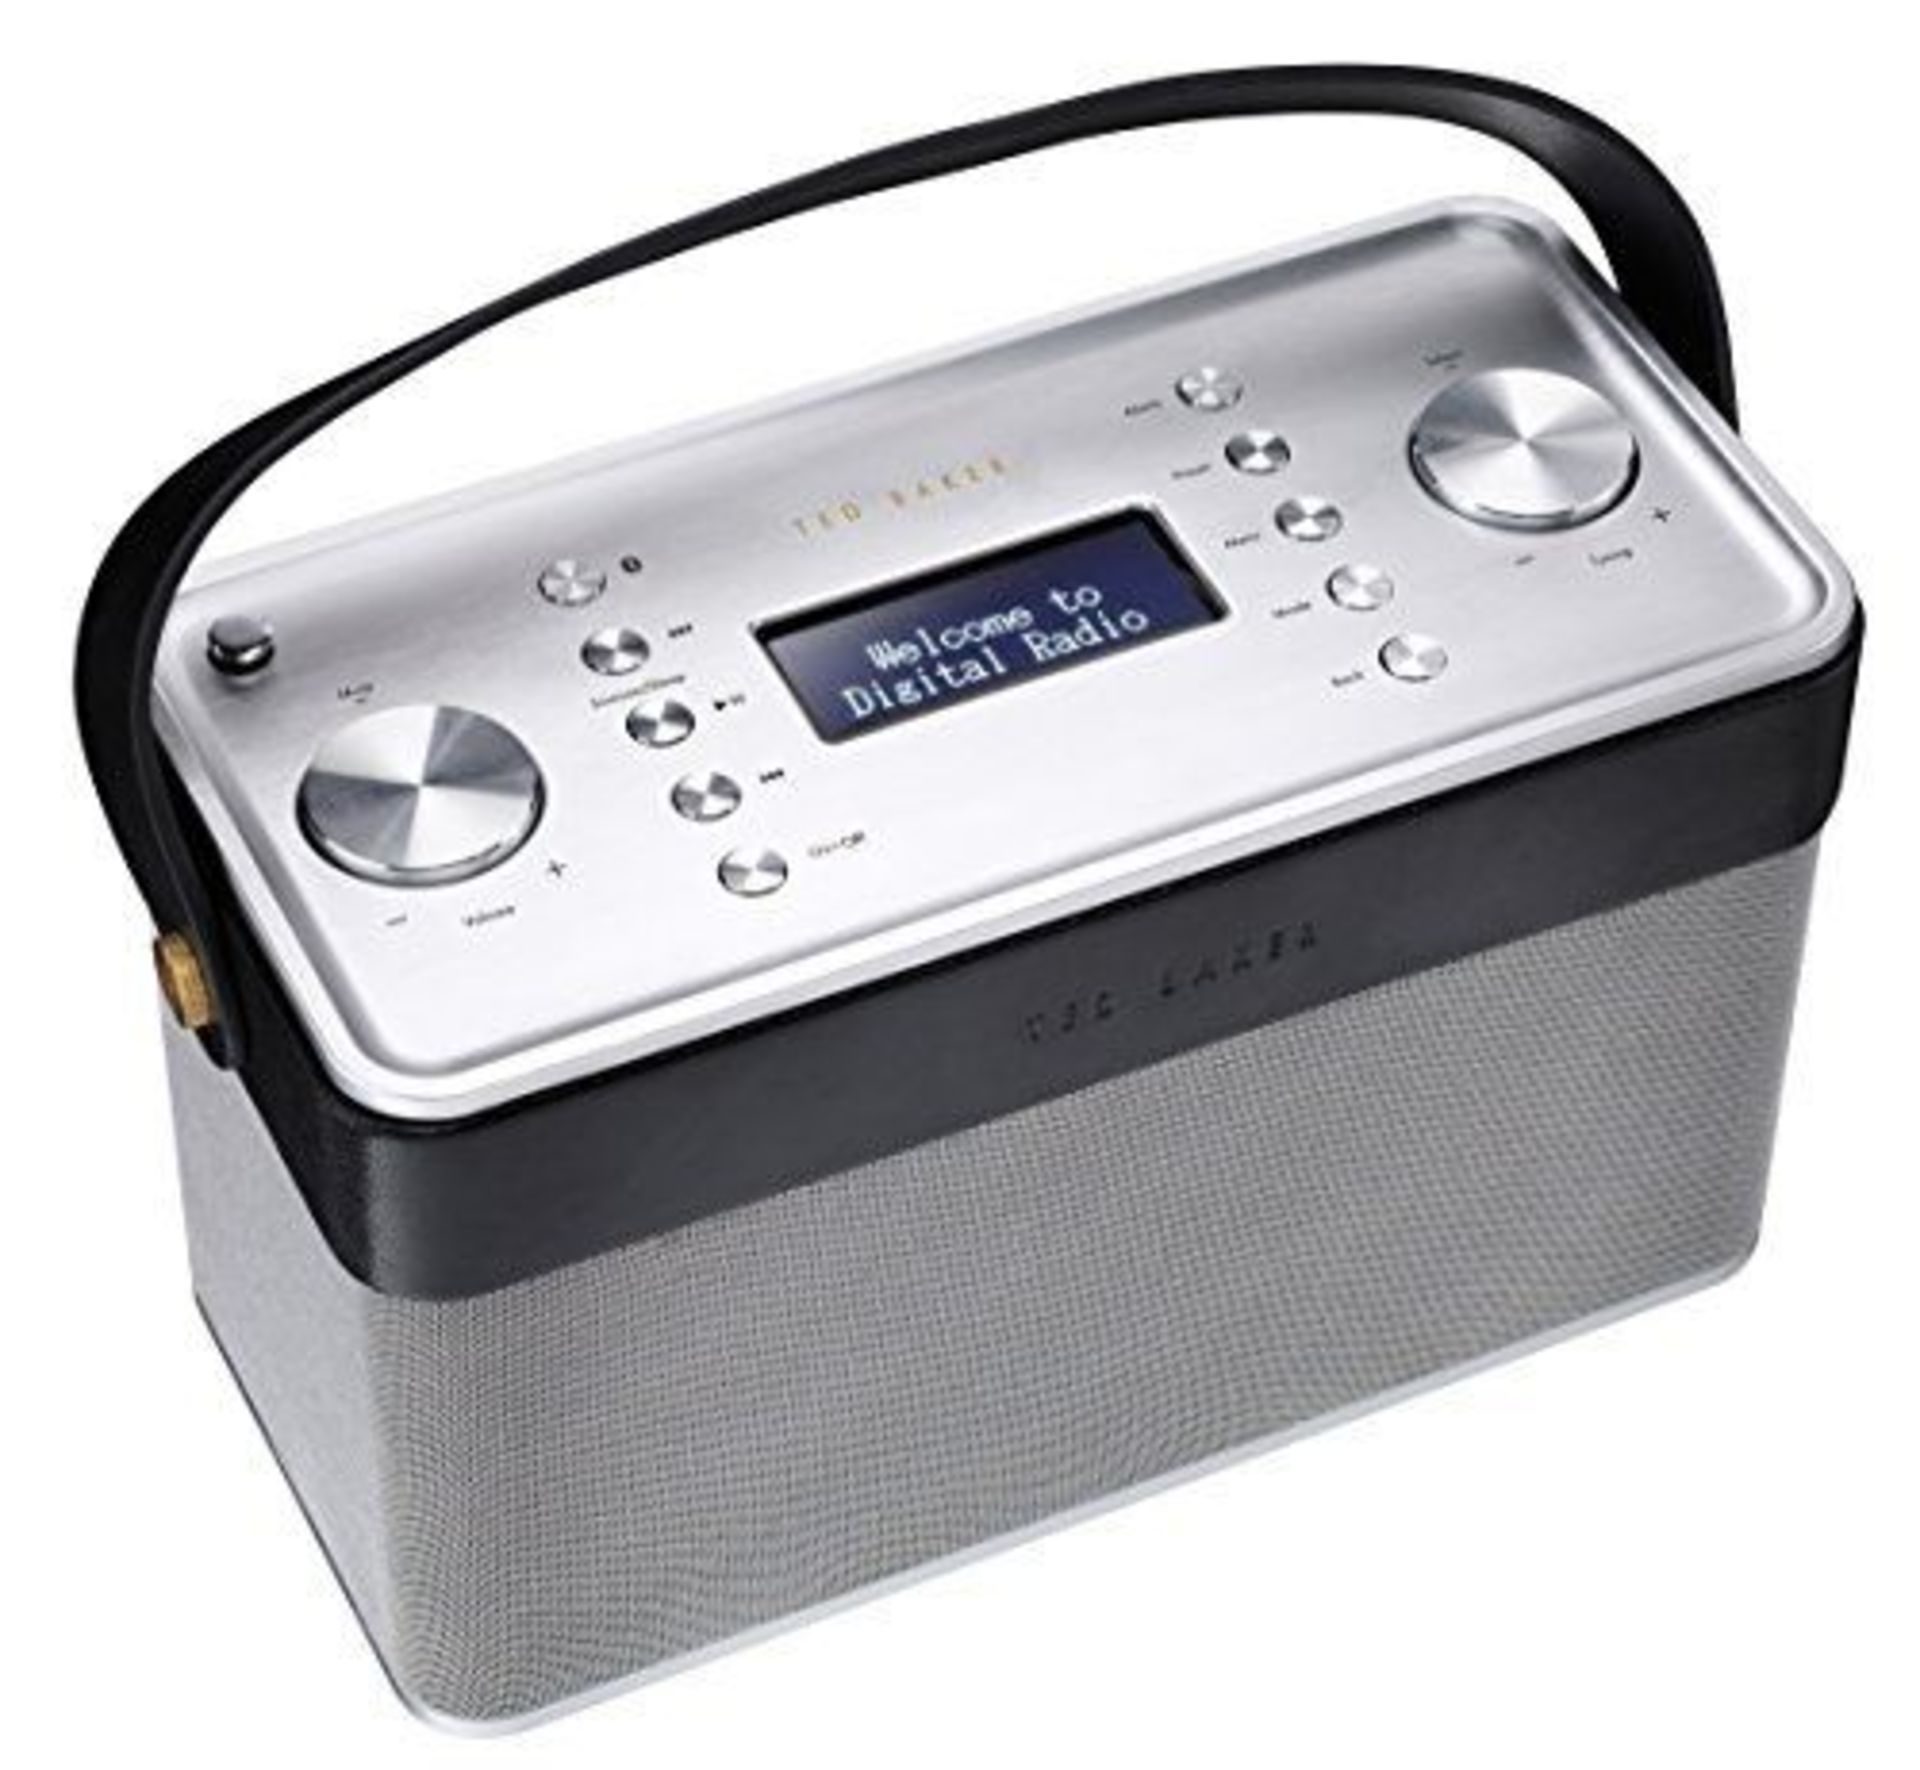 V Brand New Ted Baker Finisterre DAB/DAB+/FM Radio & Bluetooth Speaker Black/Silver RRP £199.99 eBay